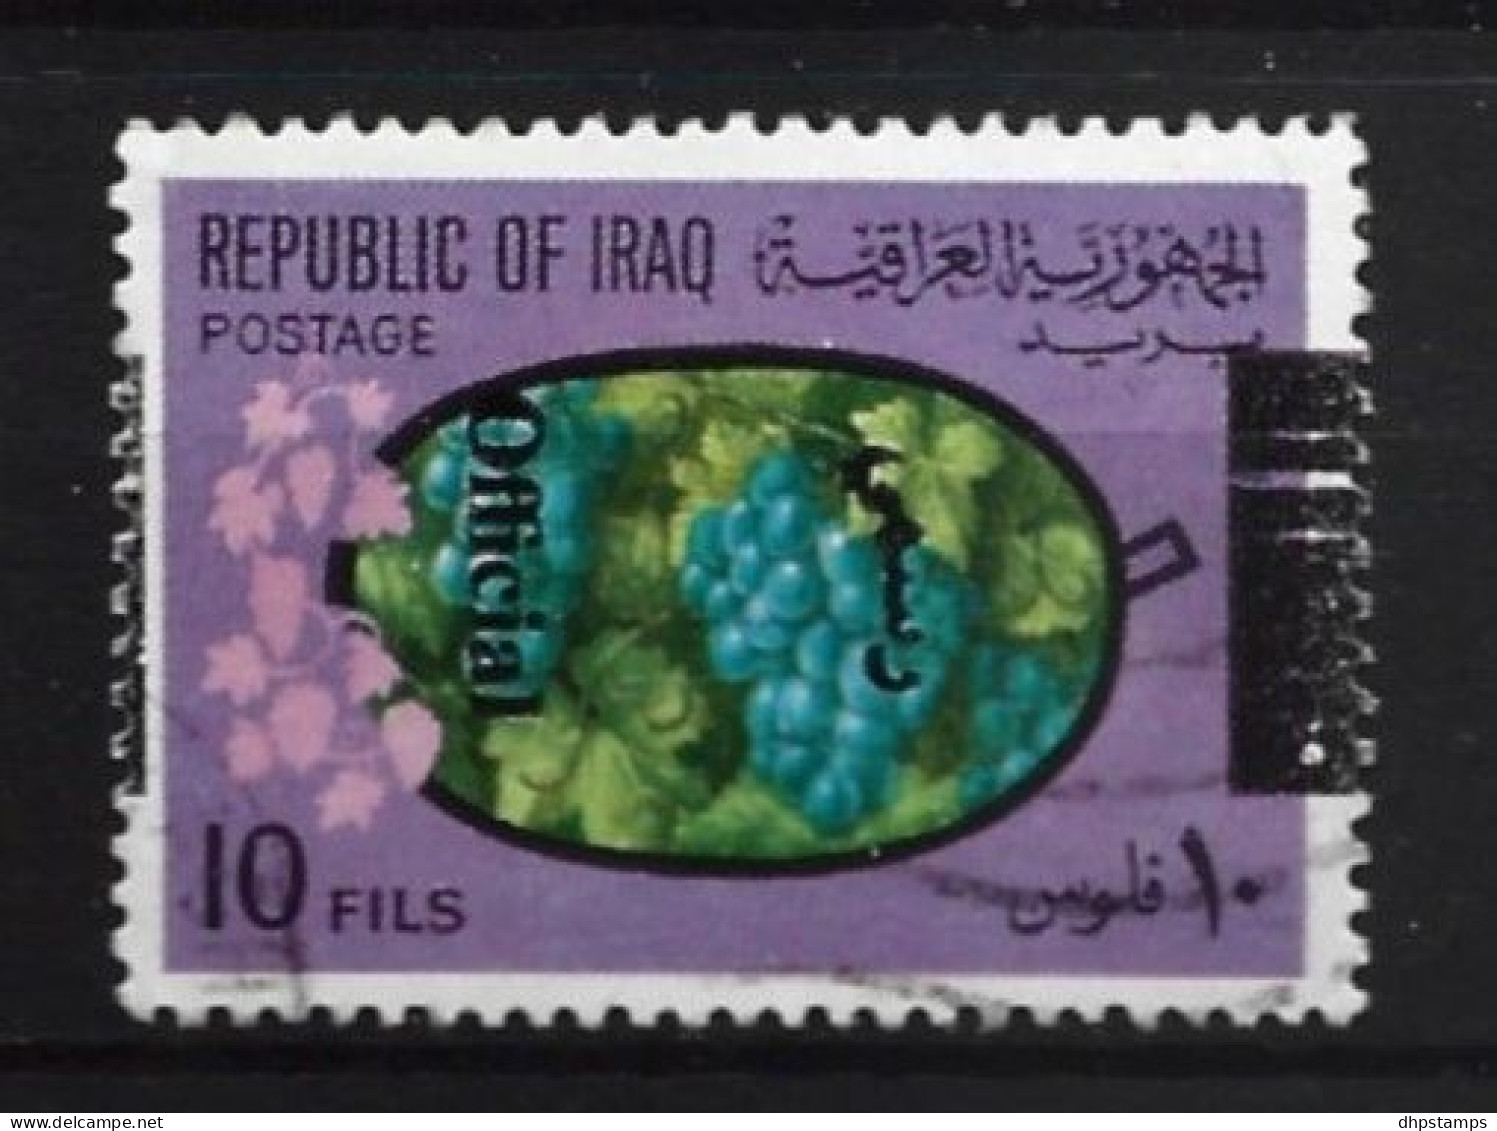 Irak 1973 Fruit Y.T. S246 (0) - Iraq